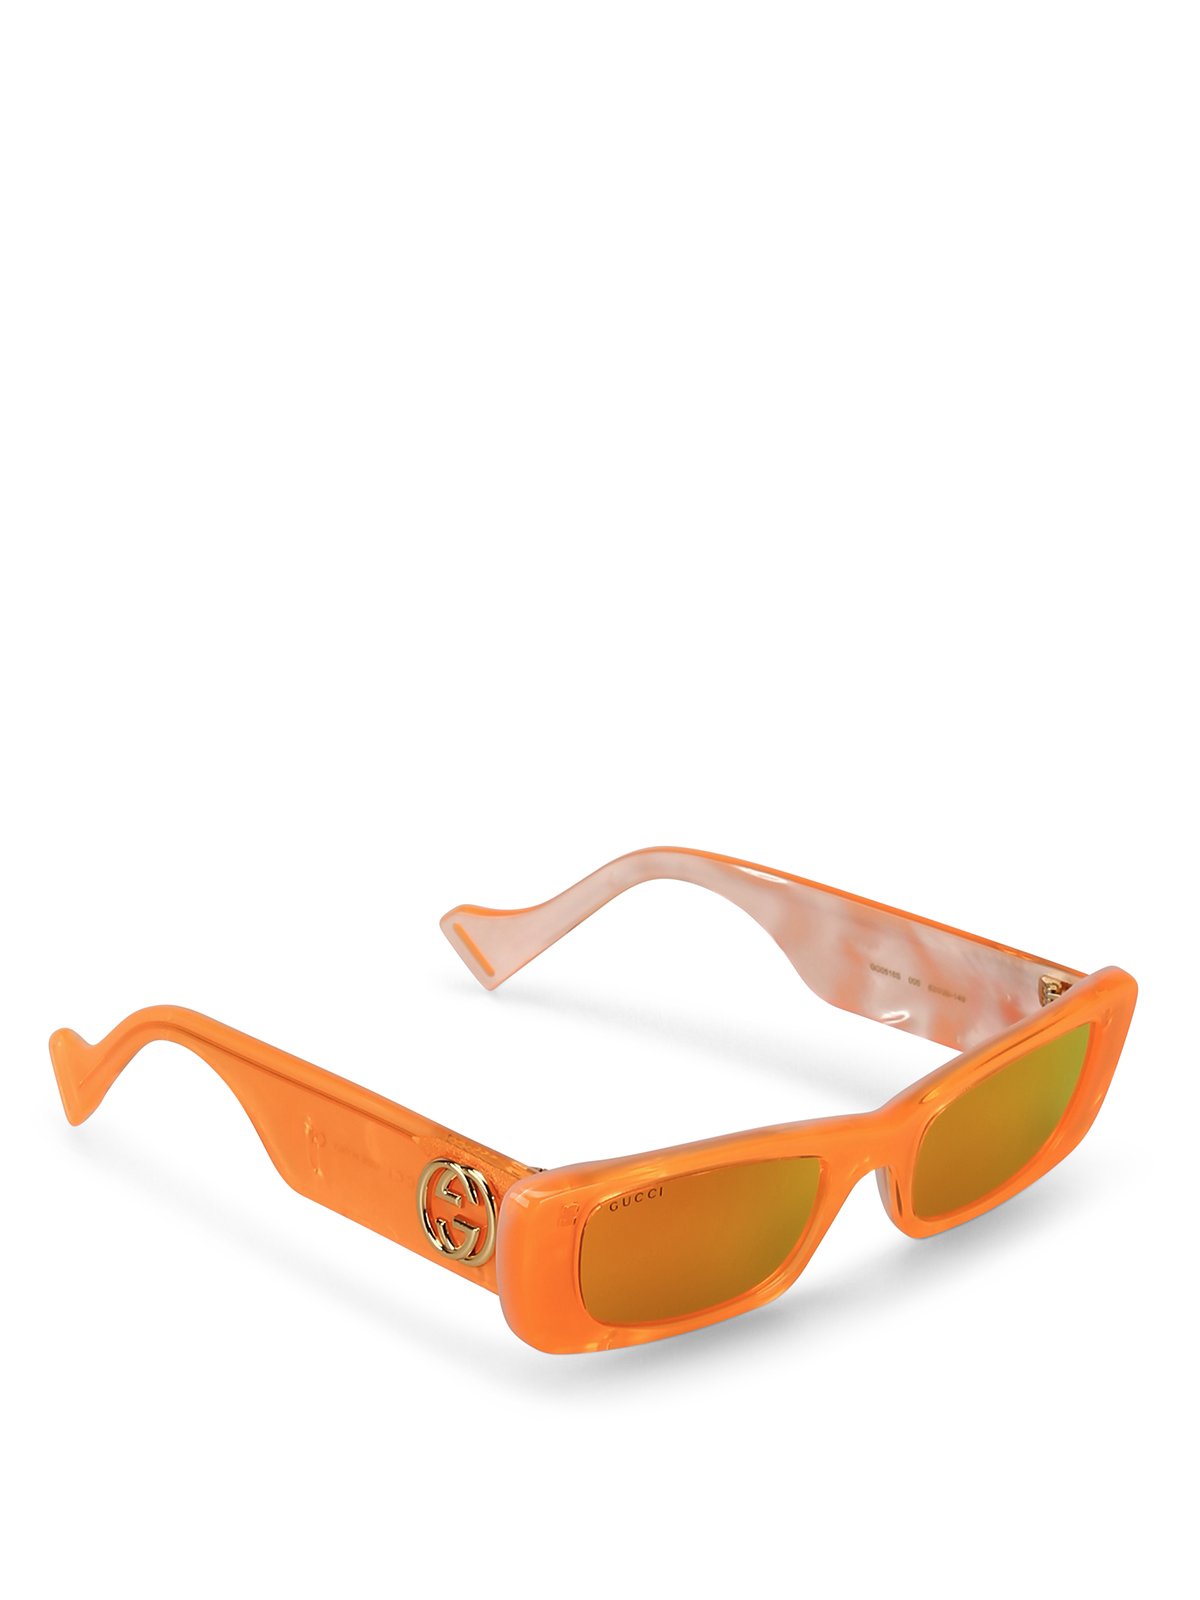 Heerlijk Groenland modder Sunglasses Gucci - Pearly orange sunglasses - GG0516S005 | iKRIX.com